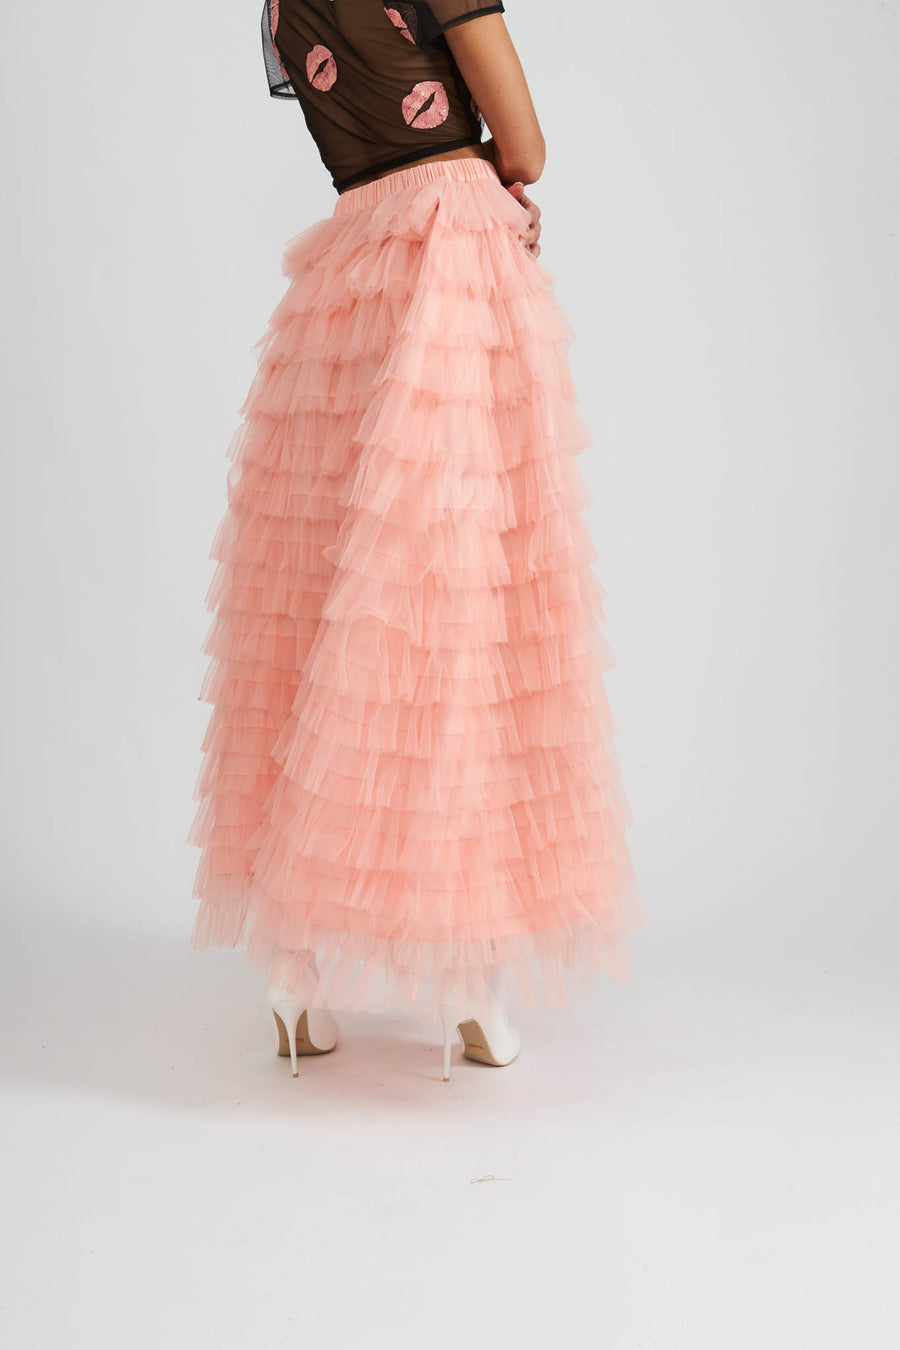 BATSHEVA - Etta Skirt in Shell Pink